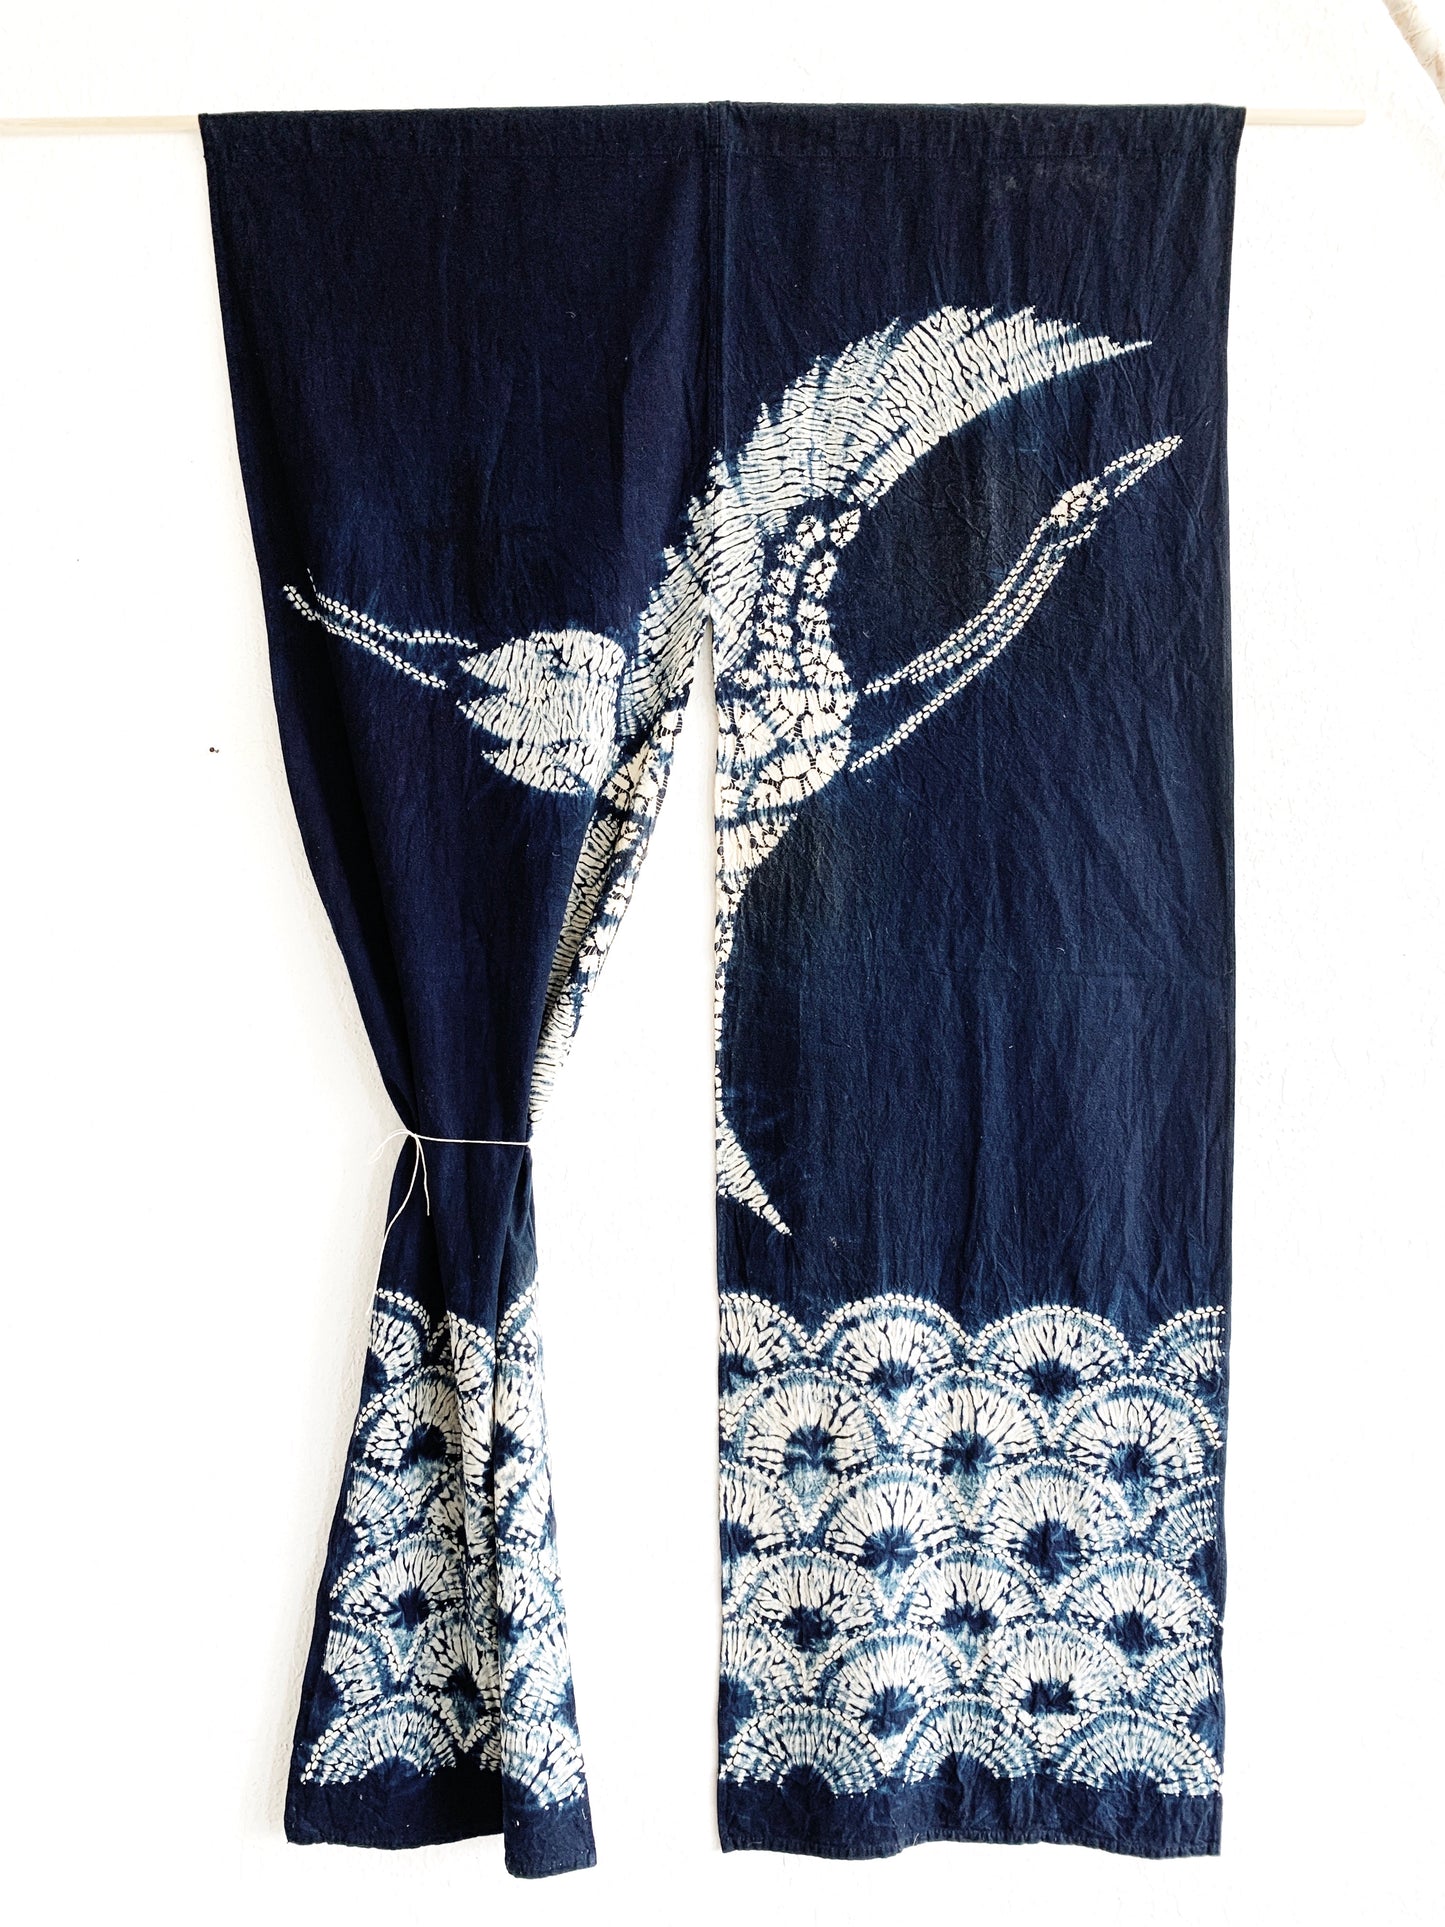 Indigo Dyed Cotton Batik Noren Curtain